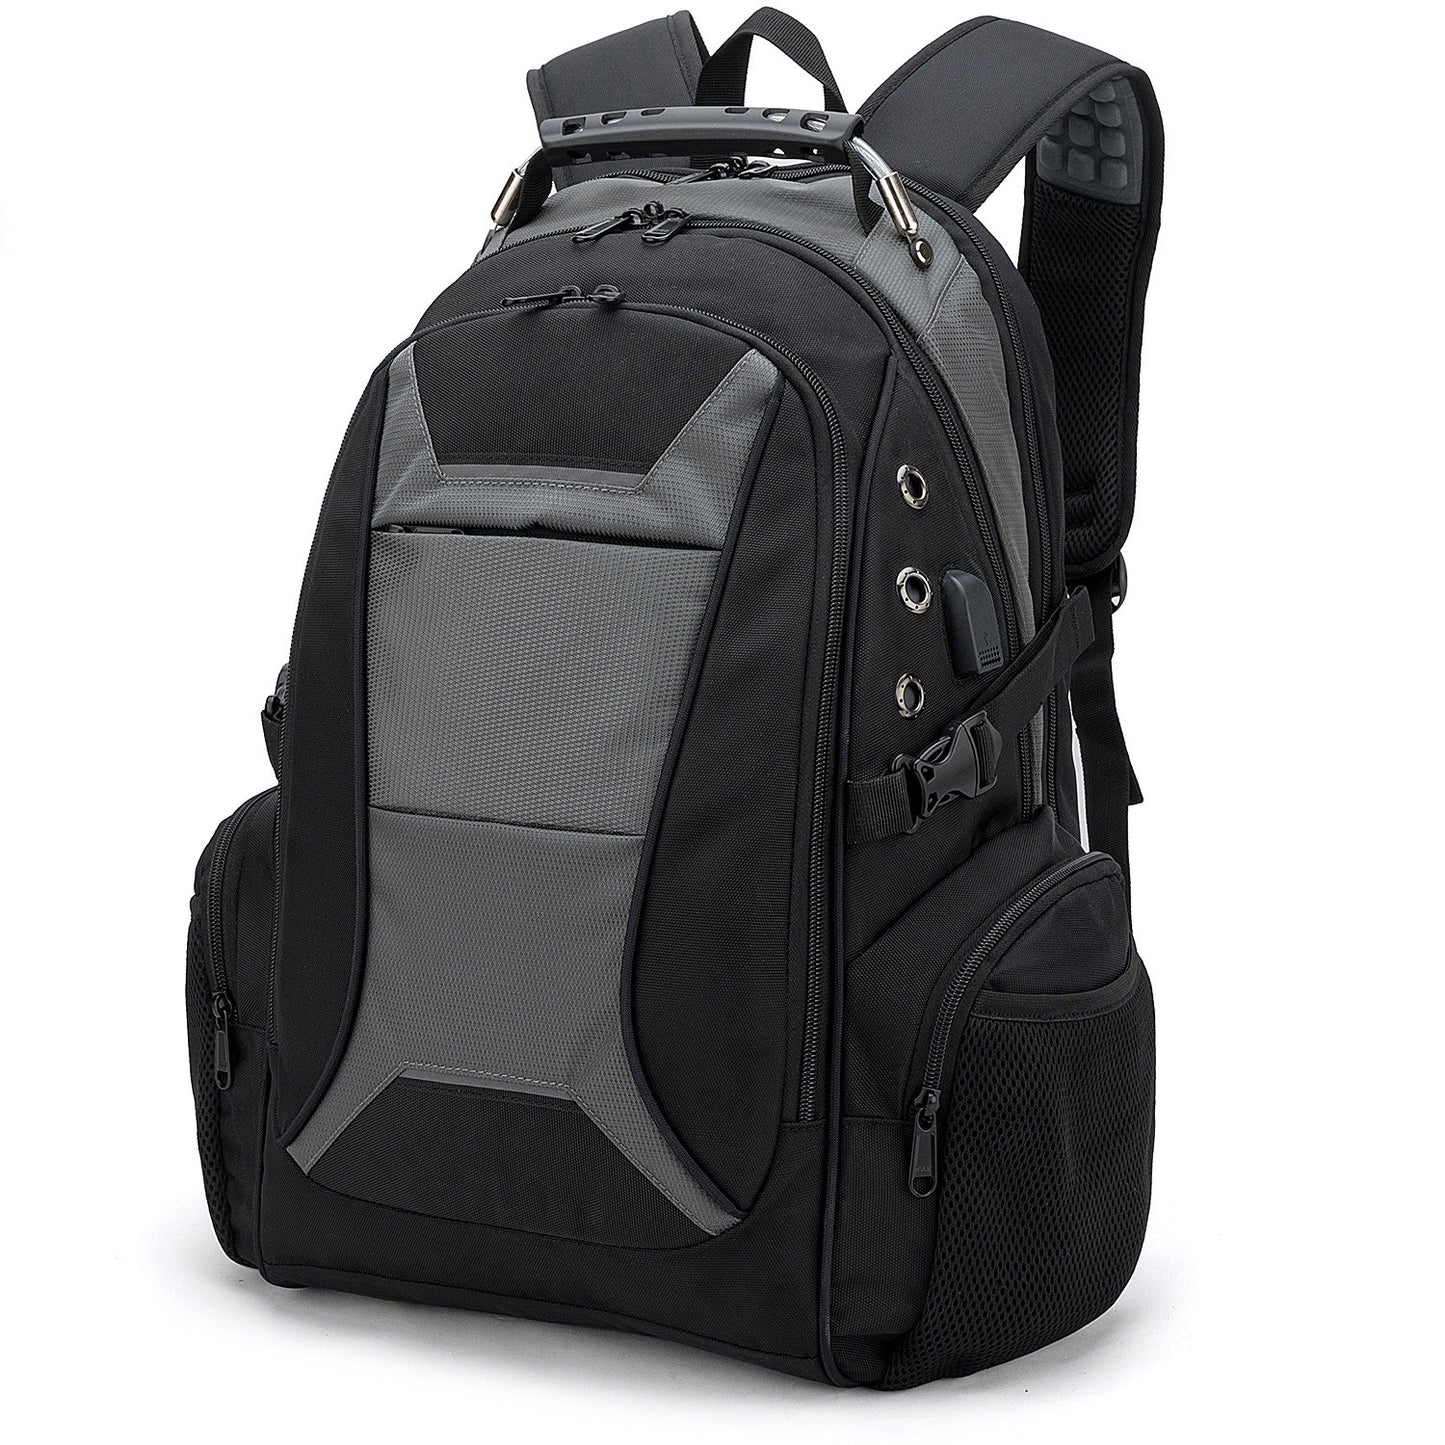 Sabre business backpack multifunctional